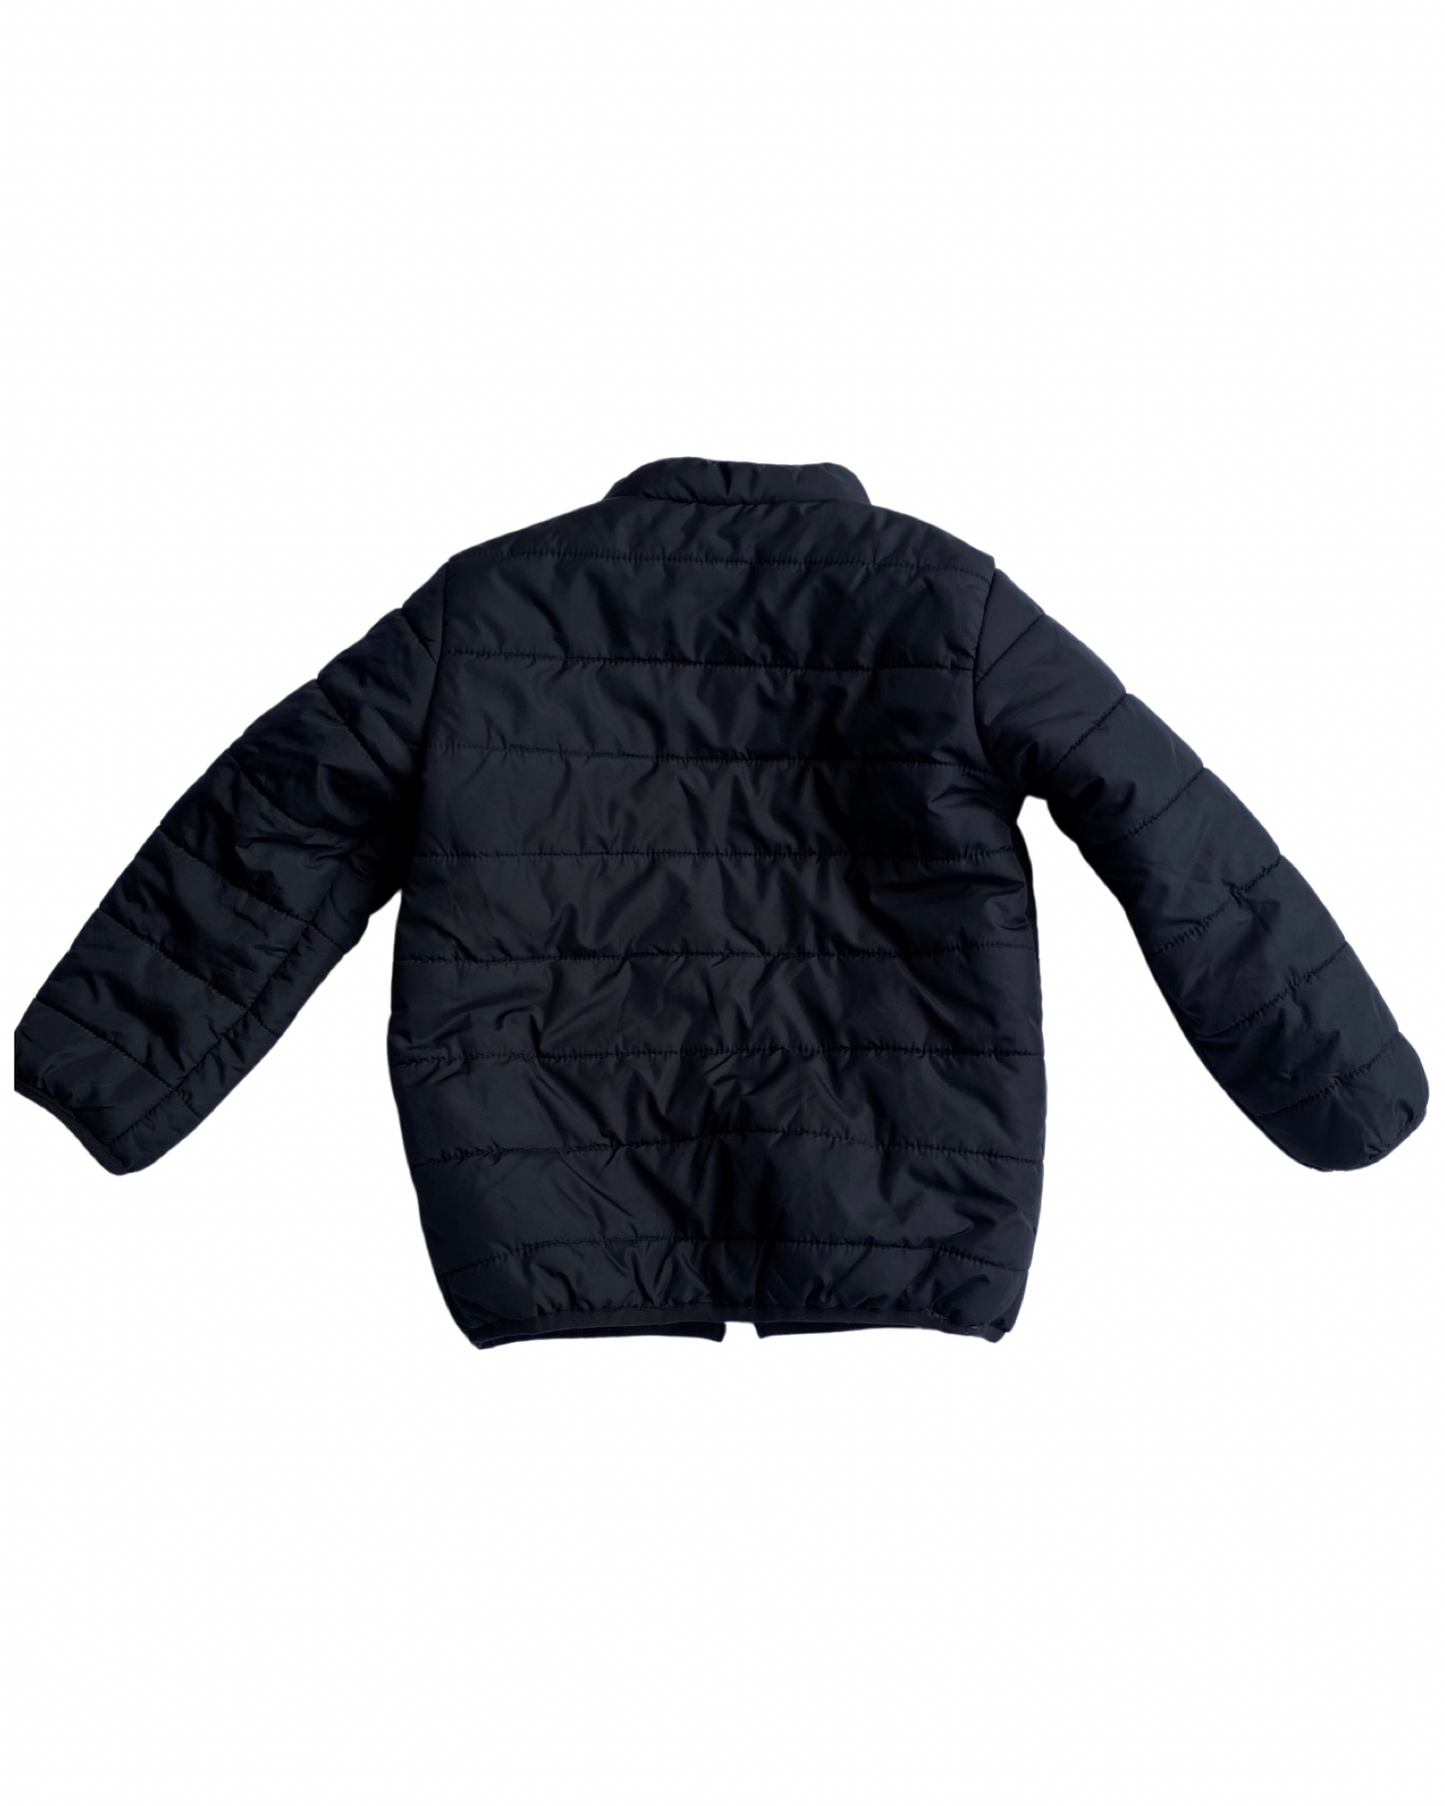 M&S black puffer jacket (4-5yrs)